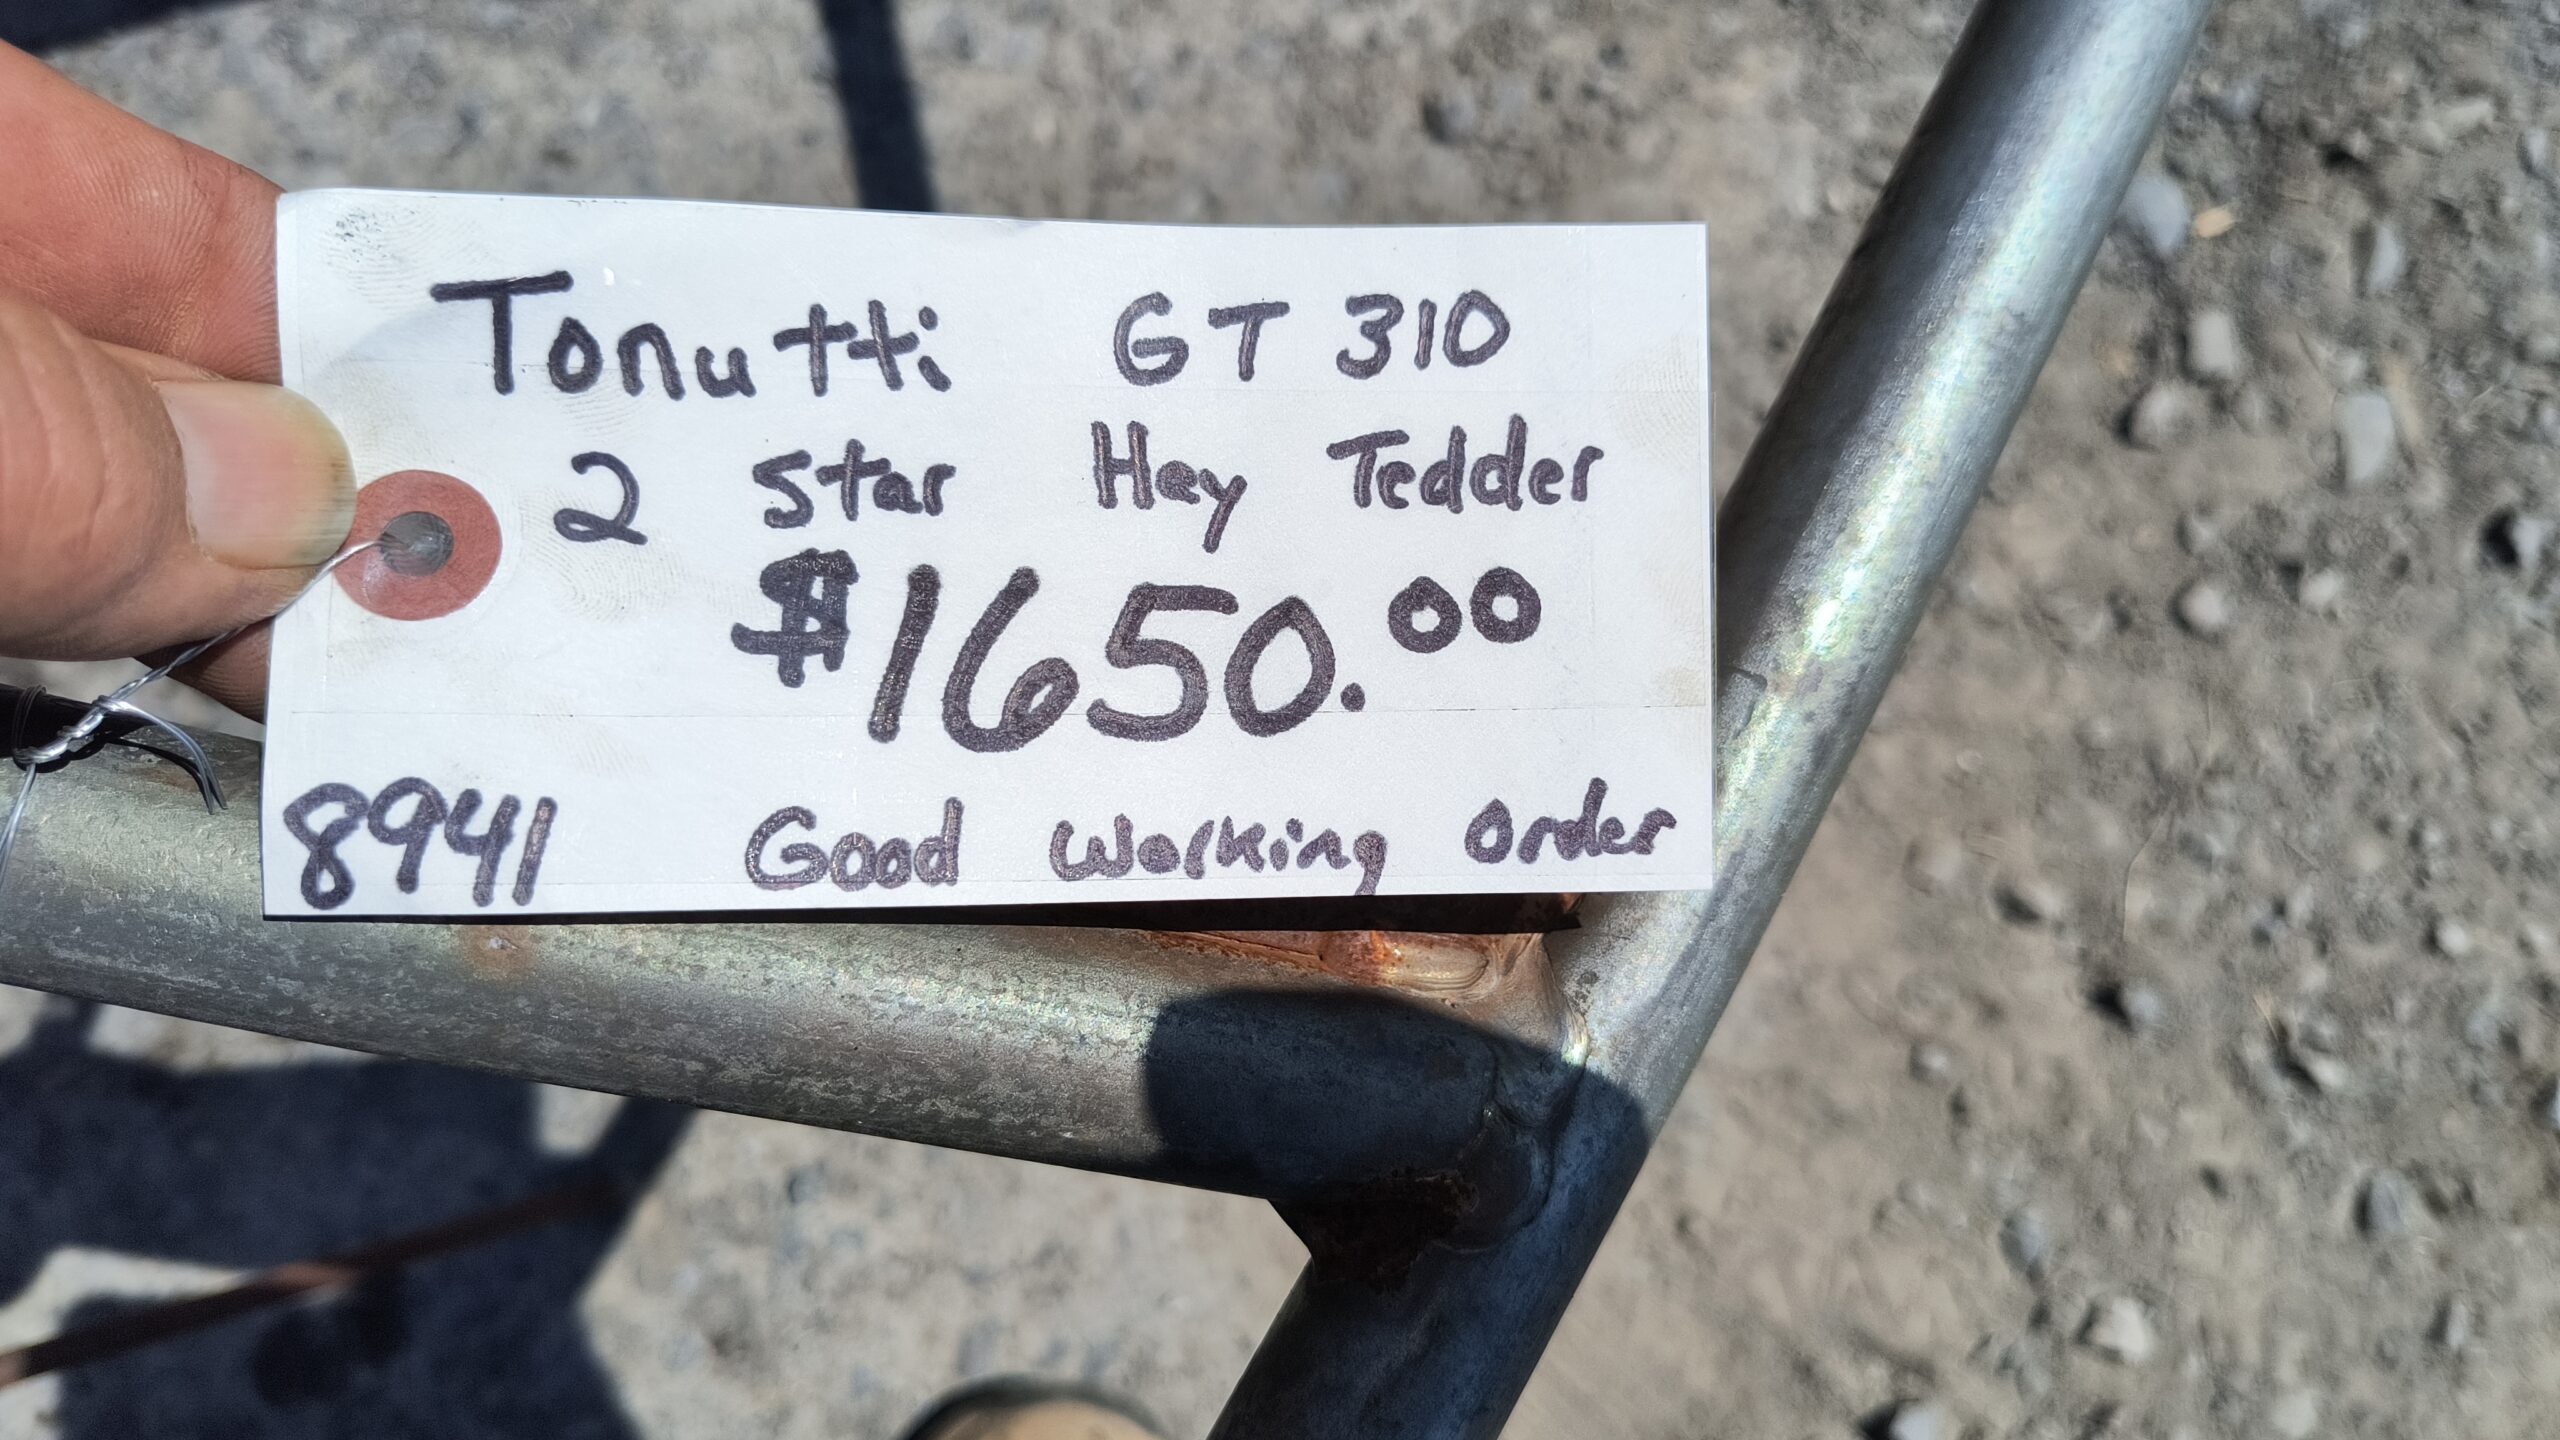 8941 Tonutti GT310 2 Star Hay Tedder $1650.00